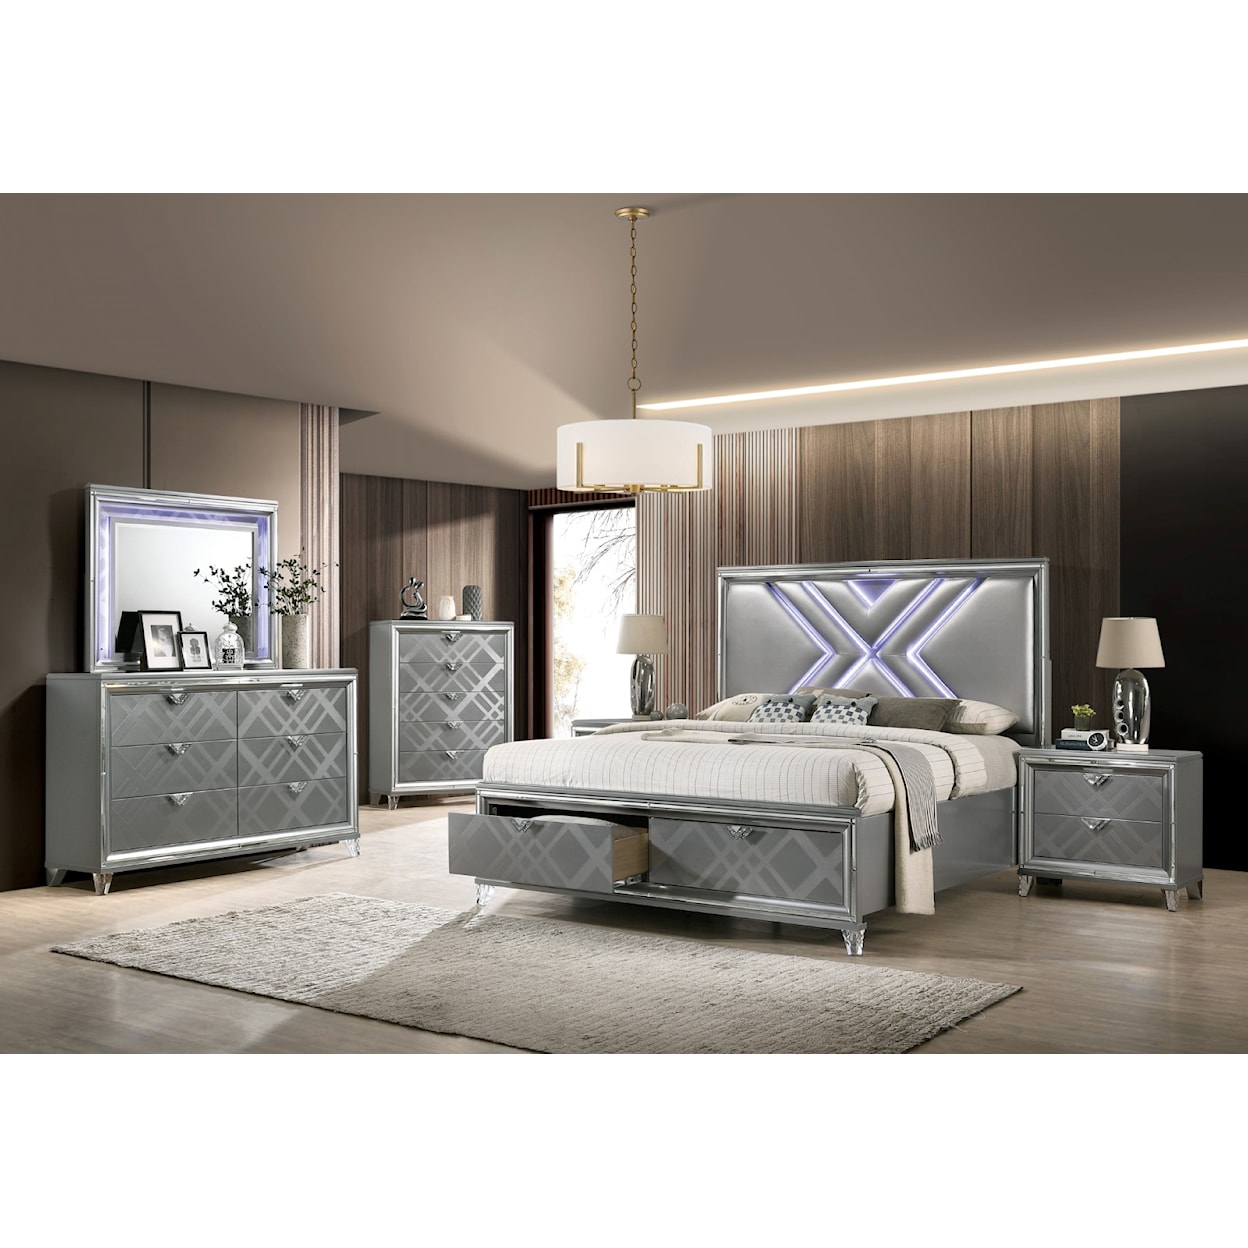 Furniture of America Emmeline Queen Bed